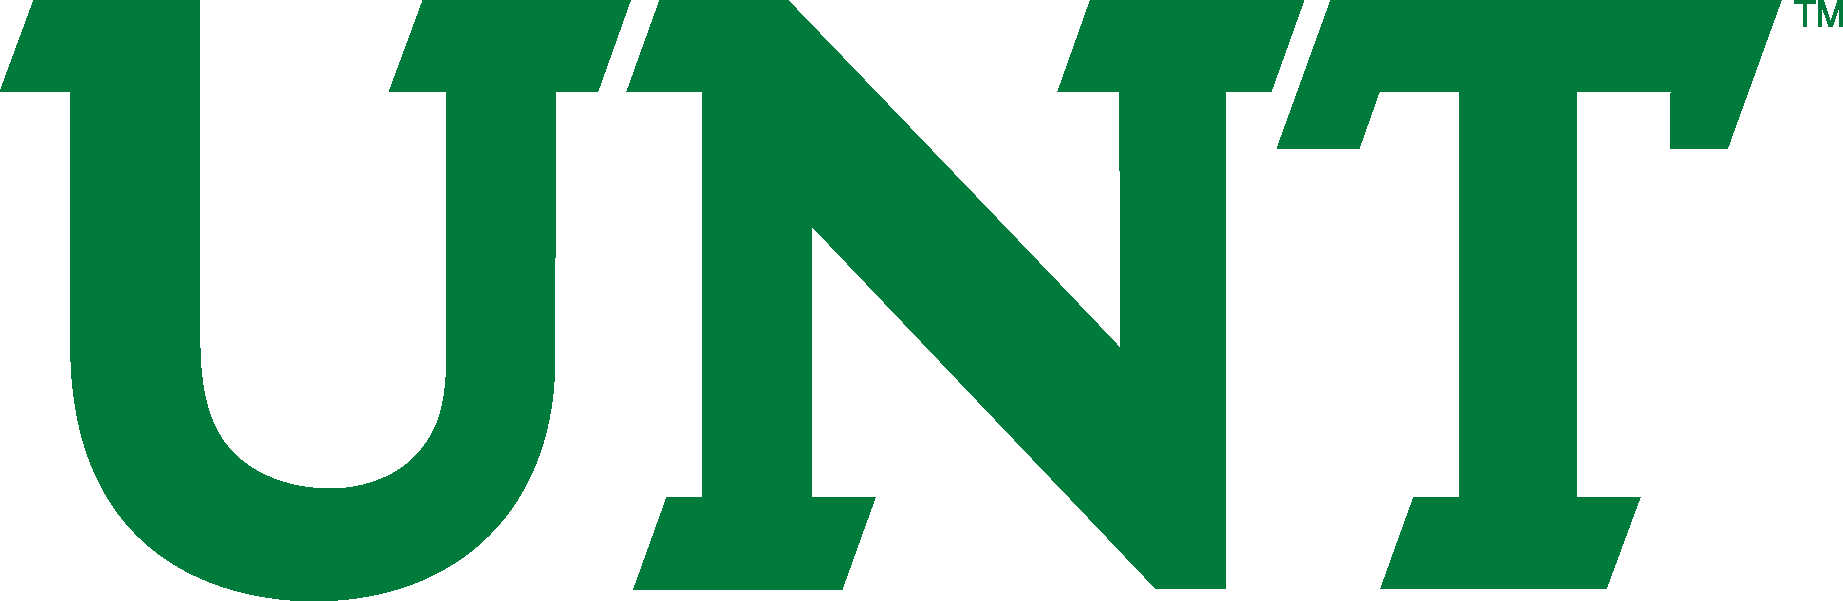 unt-university-of-north-texas-logo.png